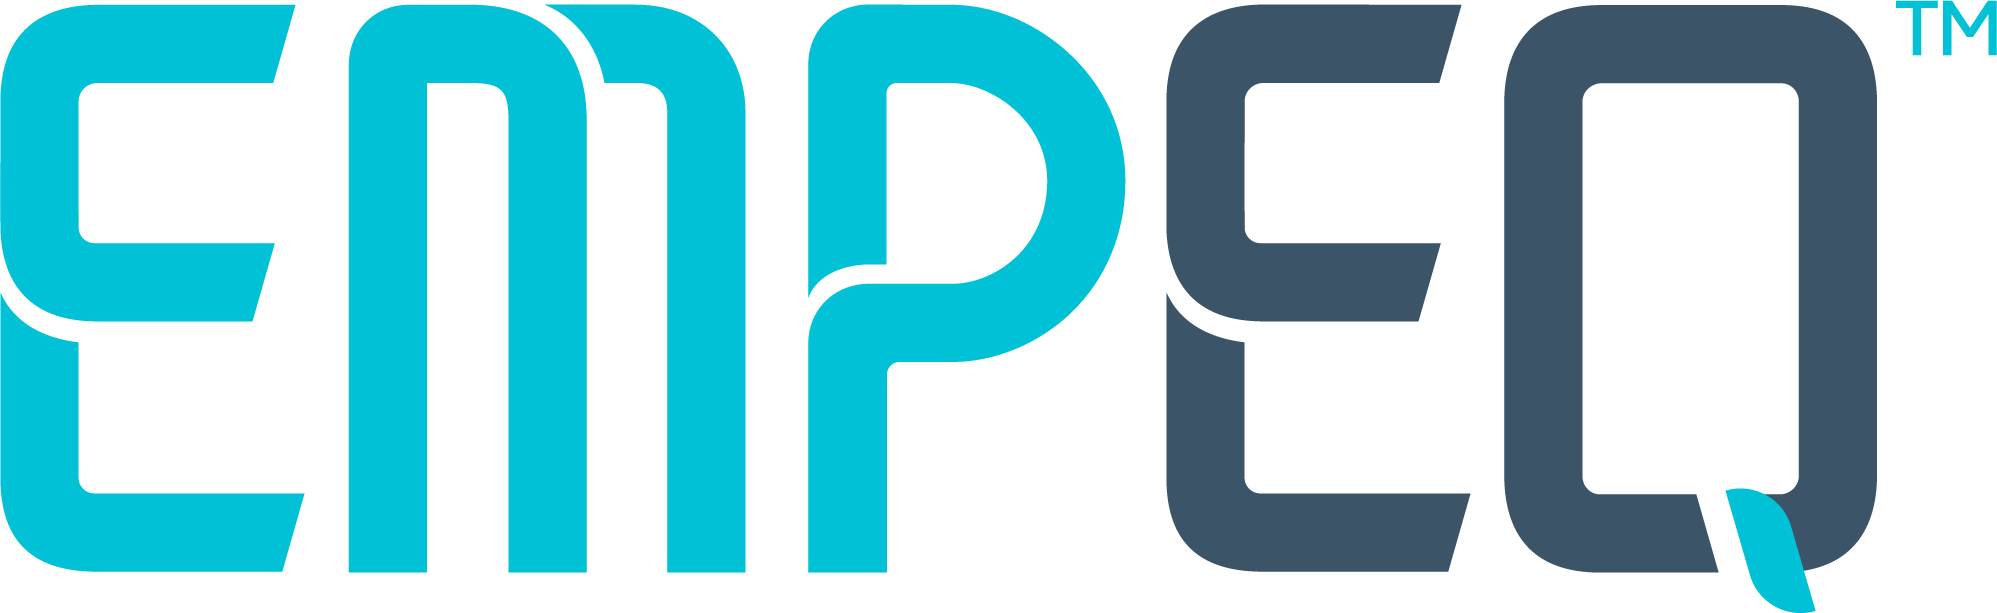 EMPEQ logo